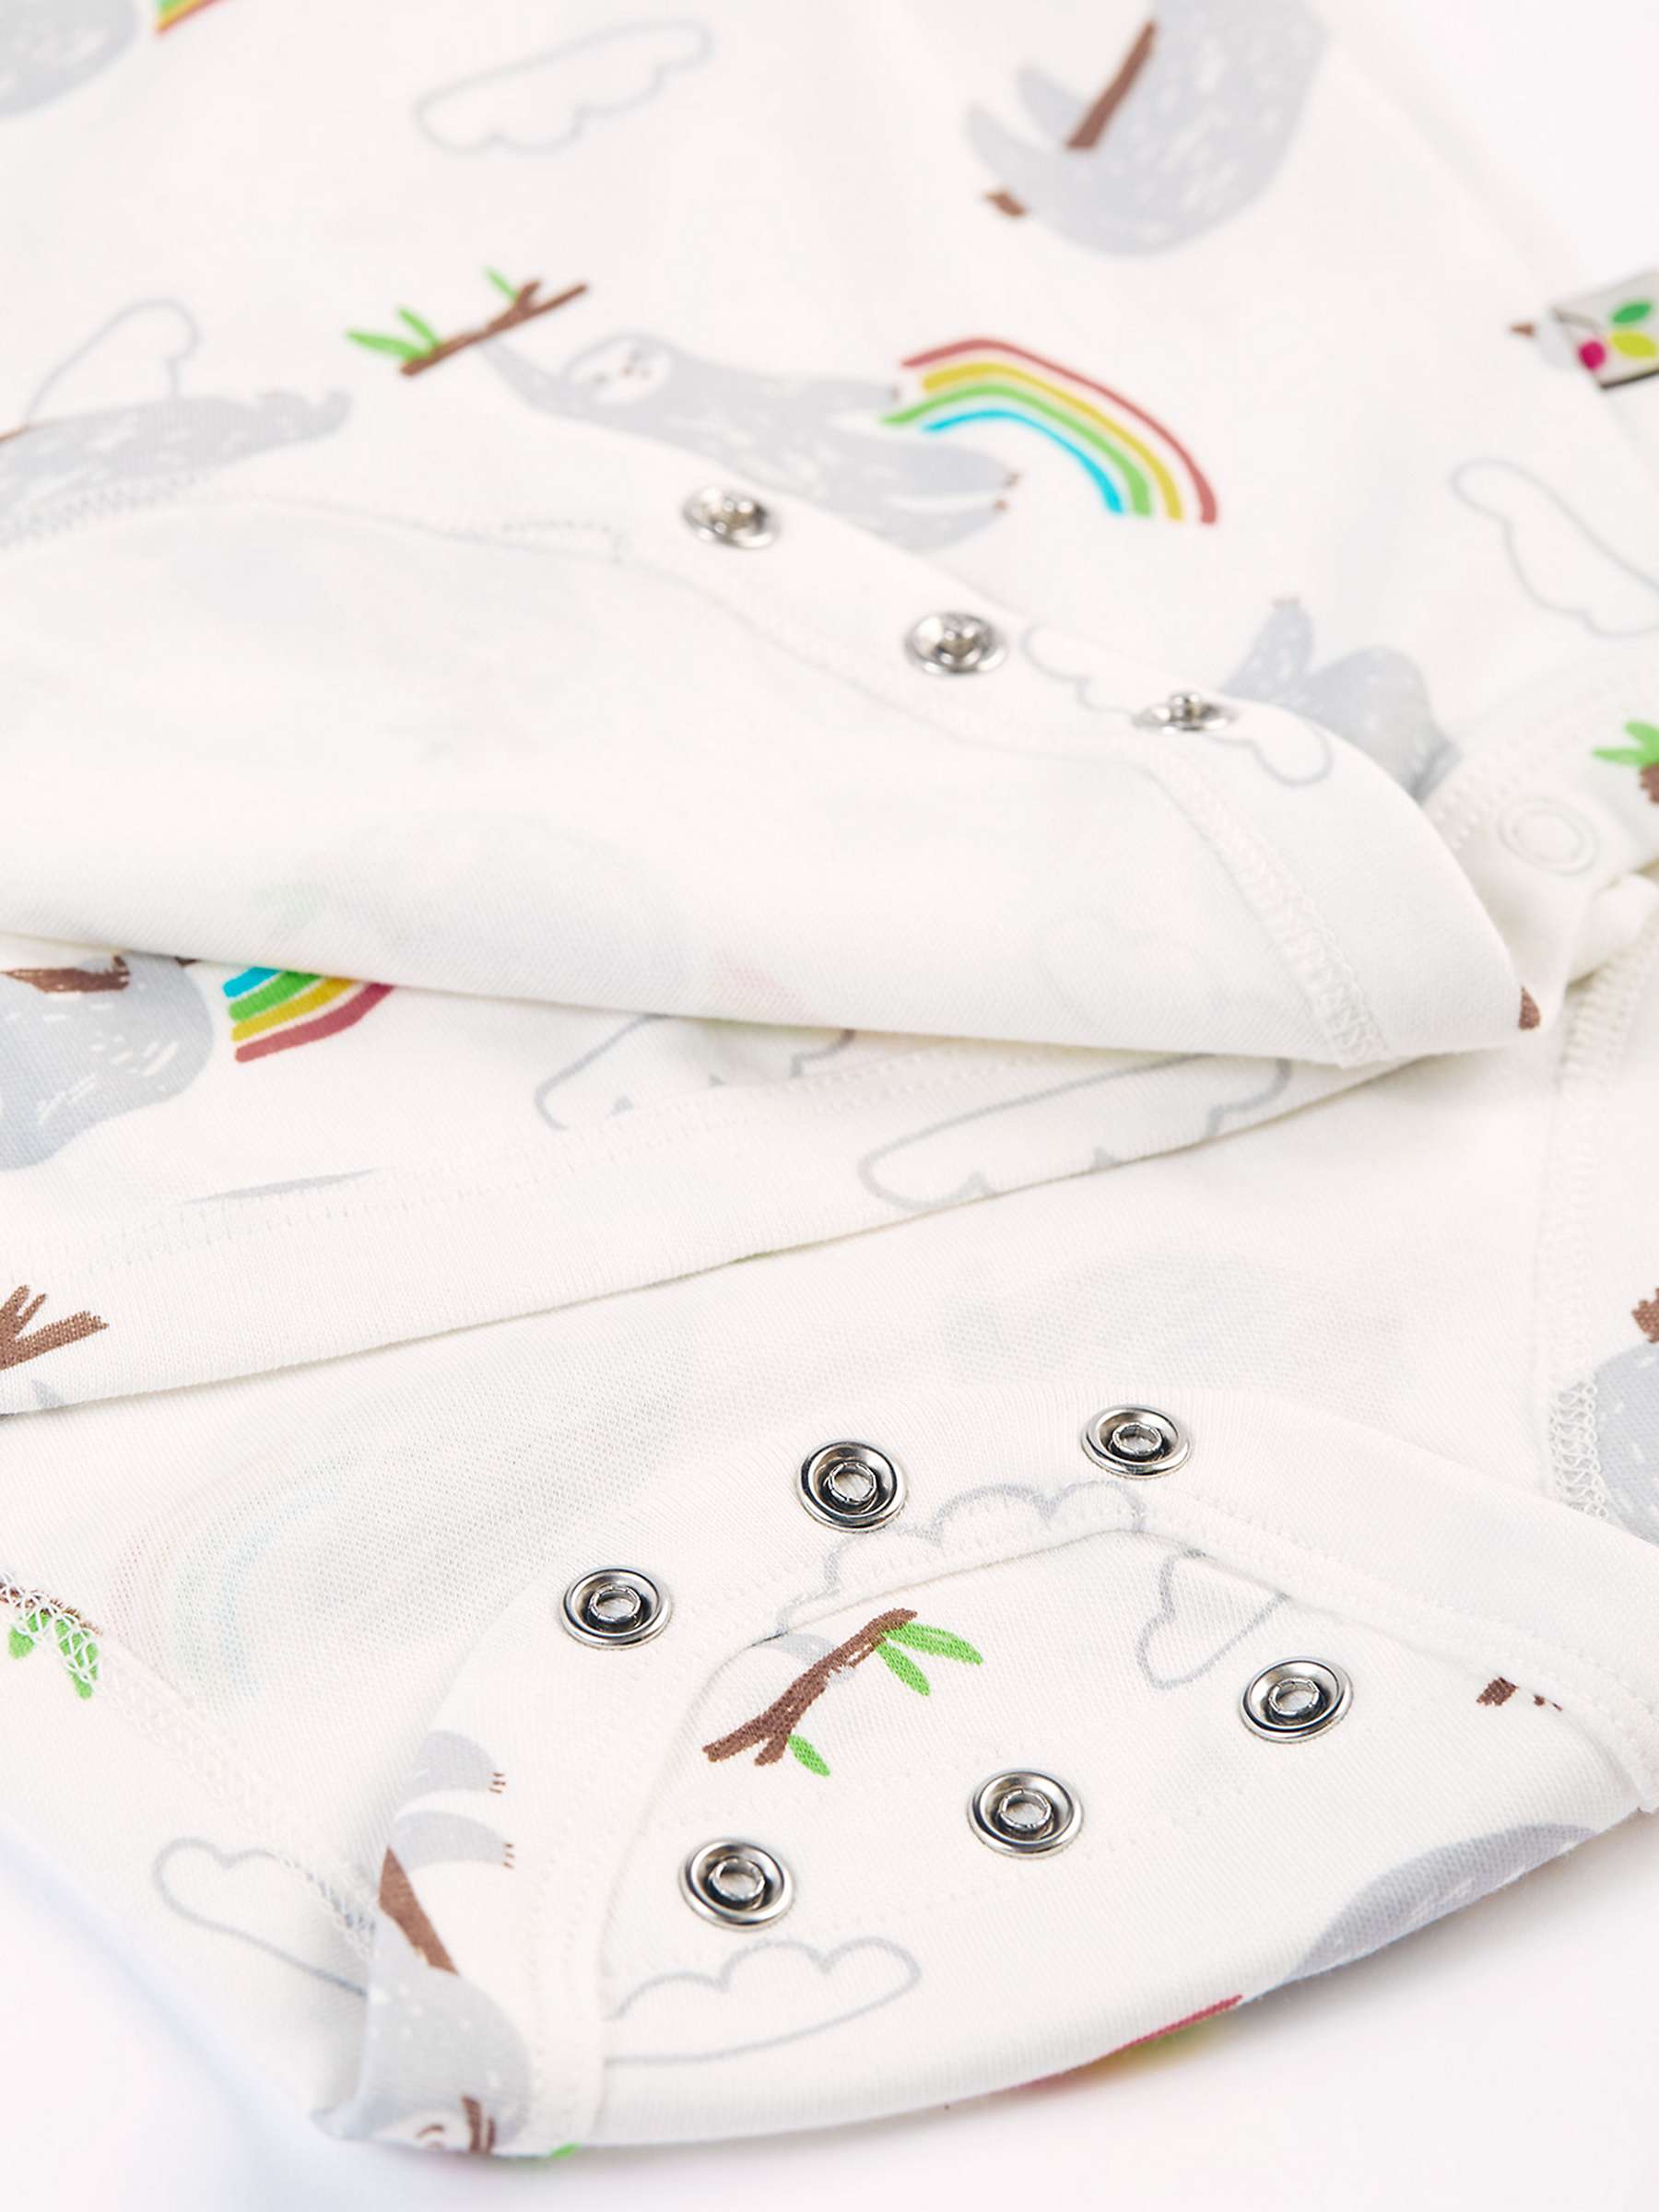 Buy Frugi Baby Shay Organic Cotton Sleepy Sloths Bodysuits, Pack of 2, Soft White/Multi Online at johnlewis.com